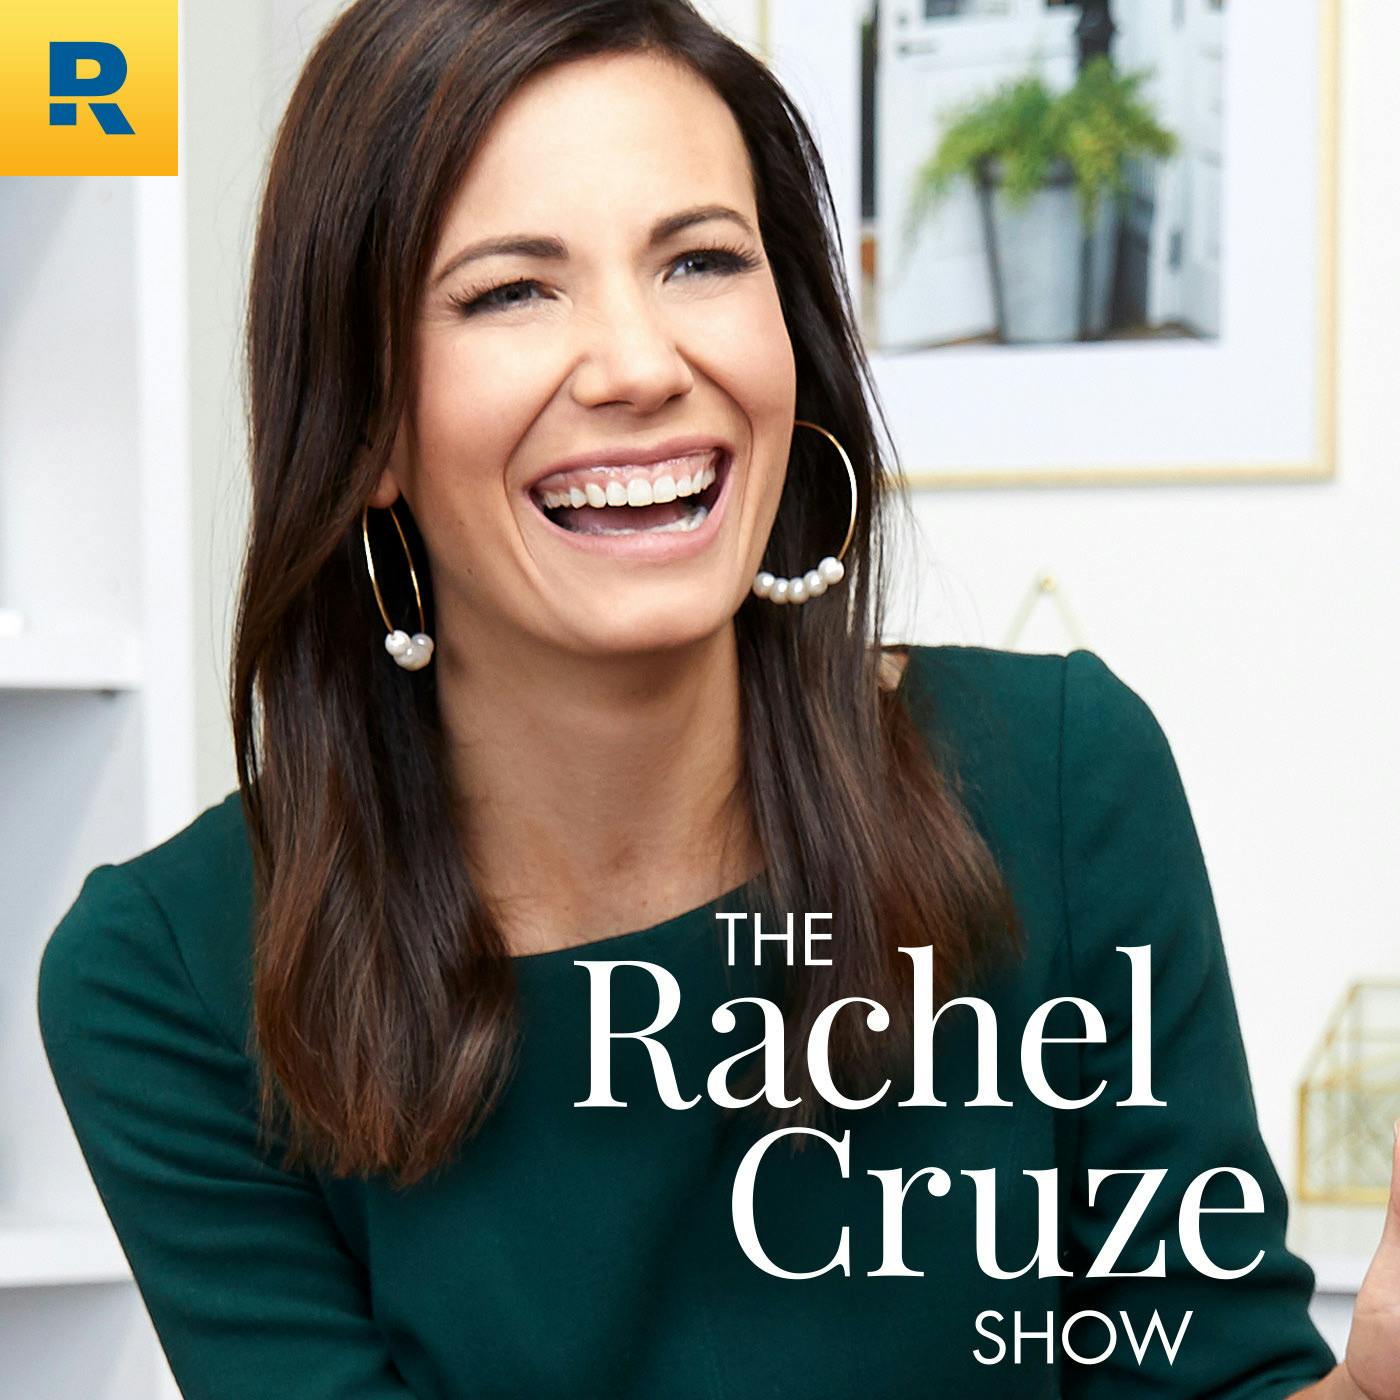 The Rachel Cruze Show podcast show image